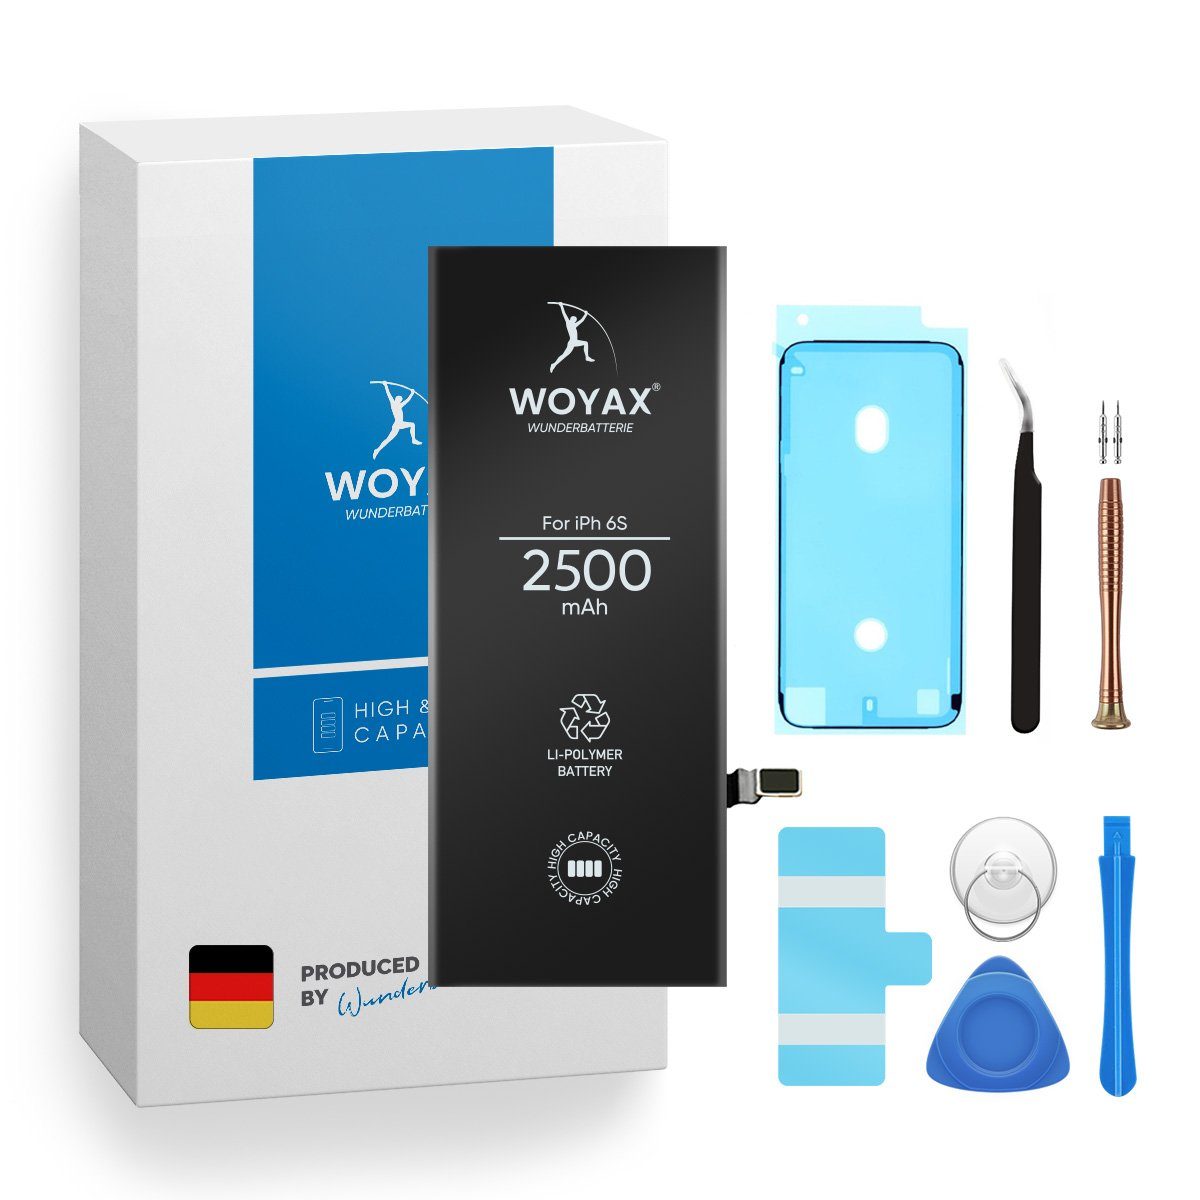 Woyax Wunderbatterie Akku für iPhone 6S 2500 mAh Hohe Kapazität Ersatzakku Handy-Akku 2500 mAh (3.82 V)